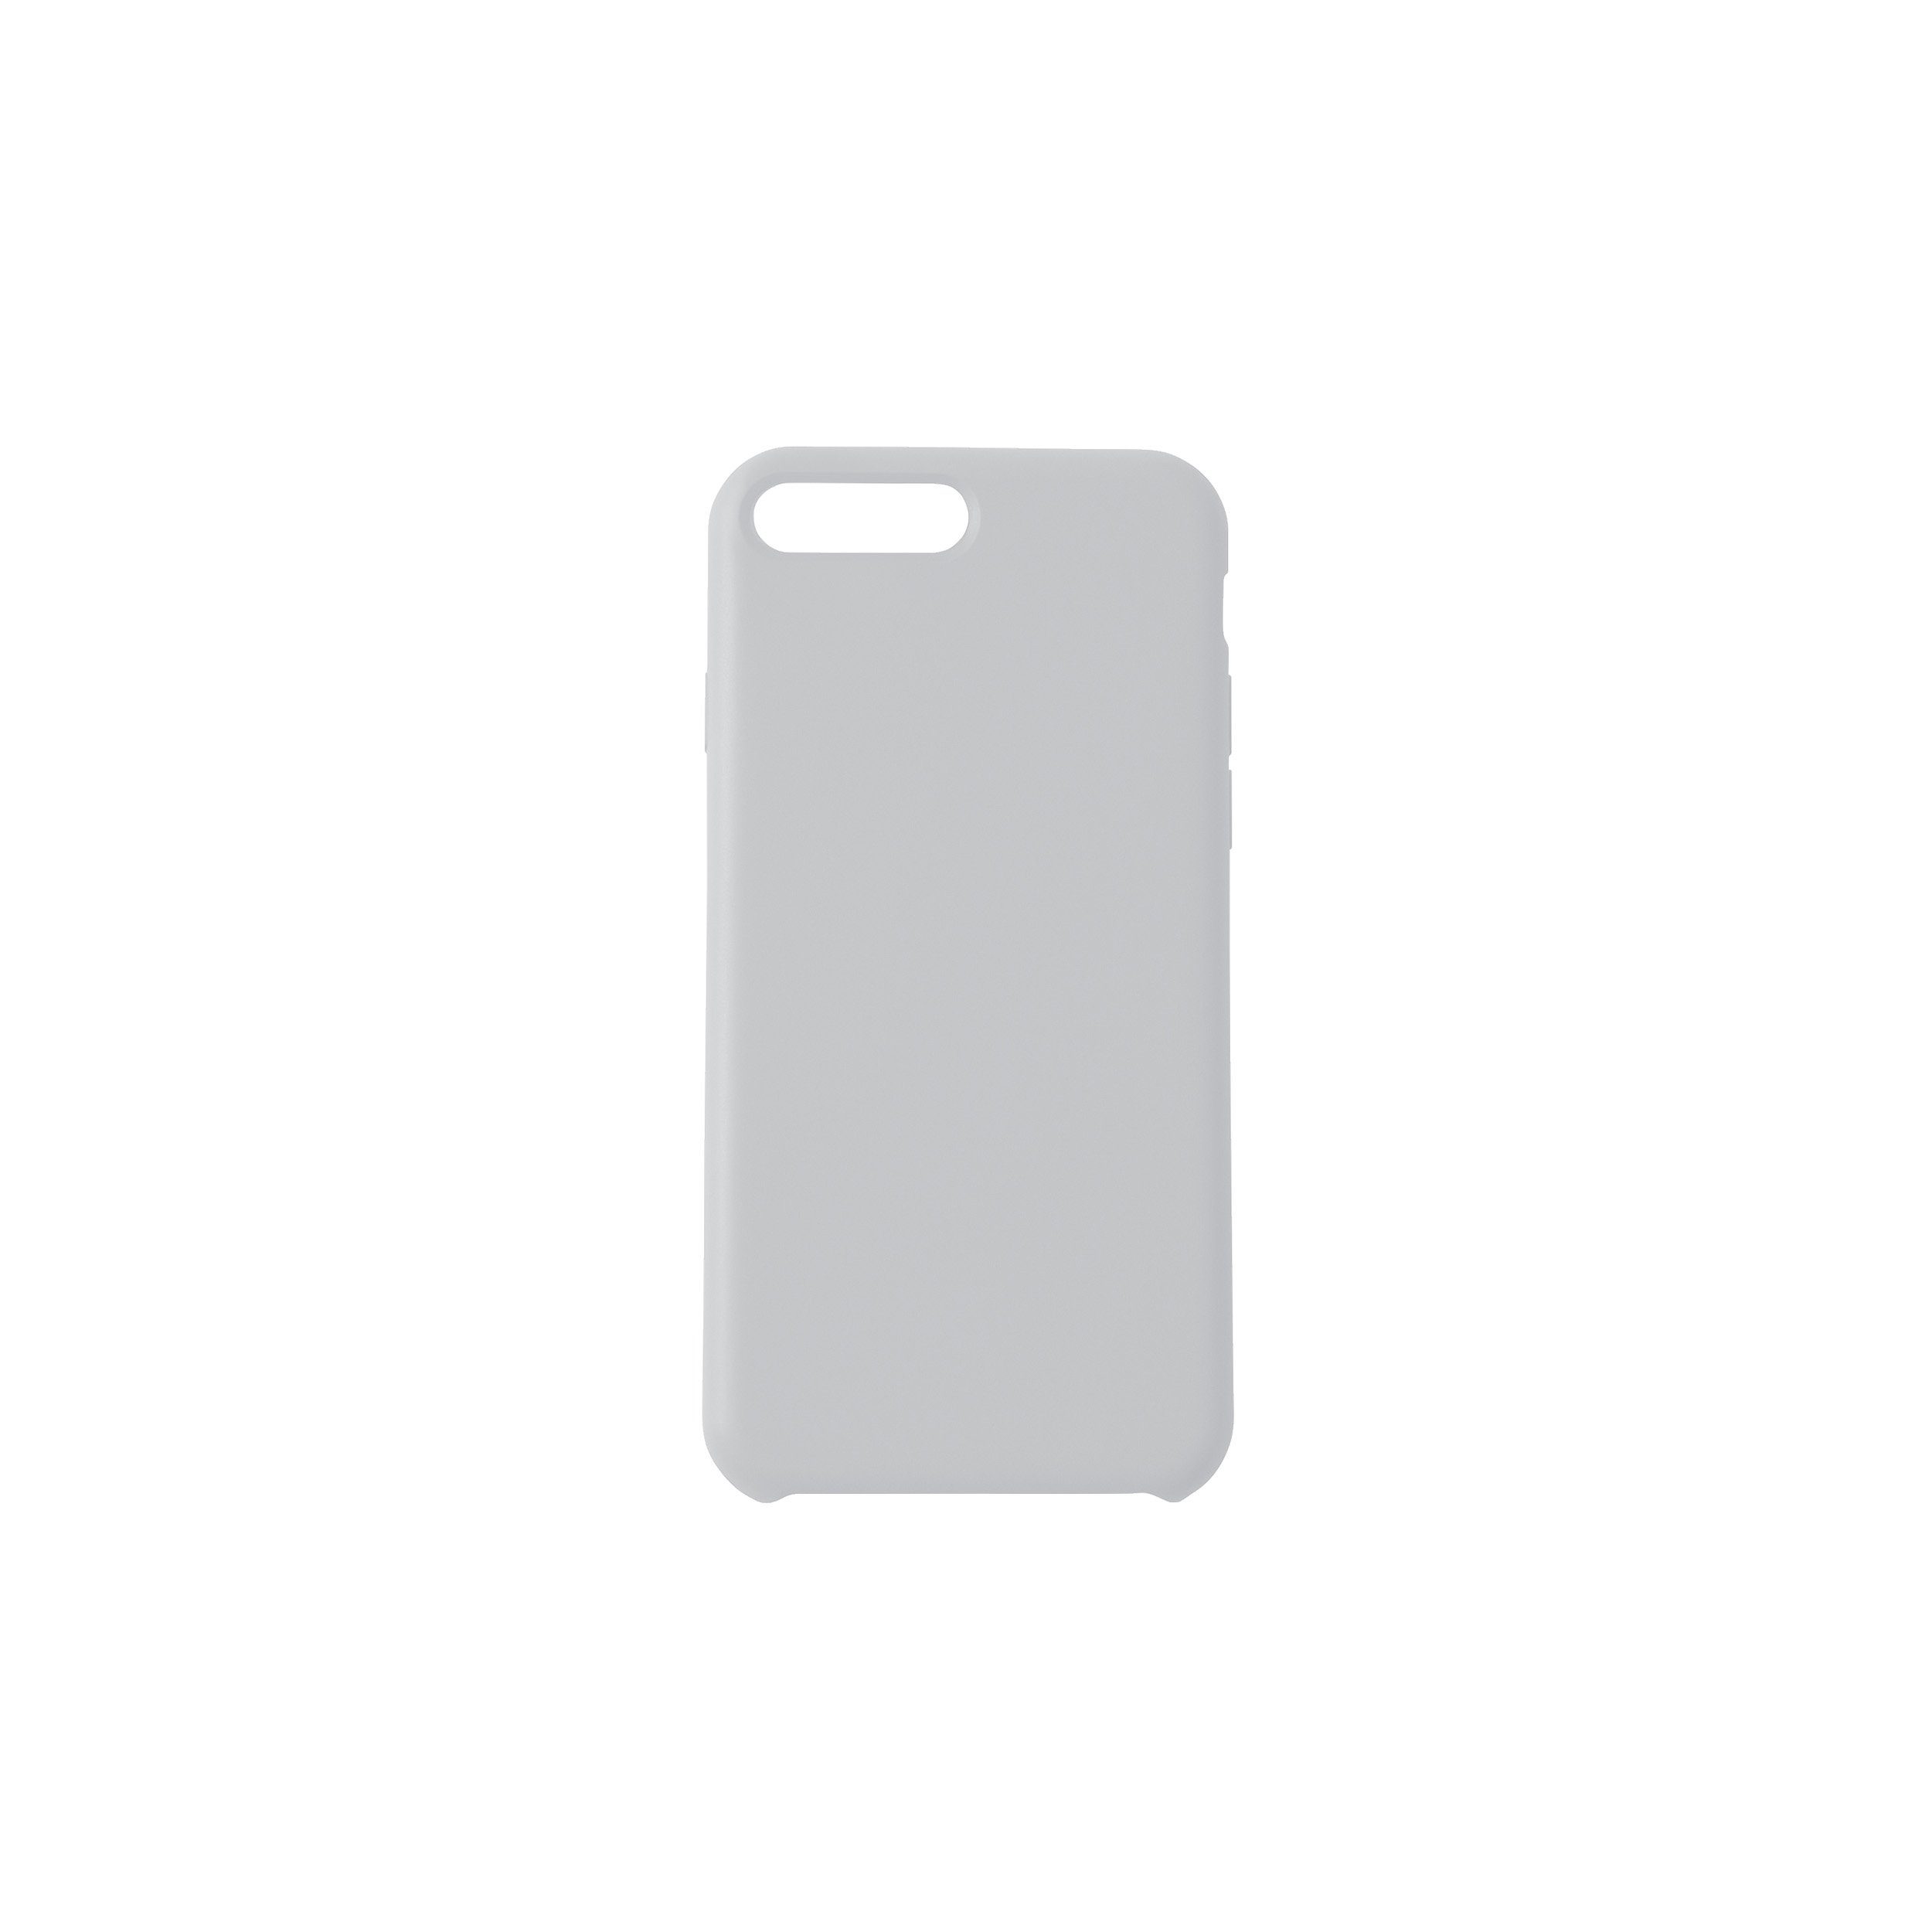 KMP Creative Lifesytle Product Handyhülle Silikon Schutzhülle für iPhone 8 Plus Business Gray 5,5 Zoll